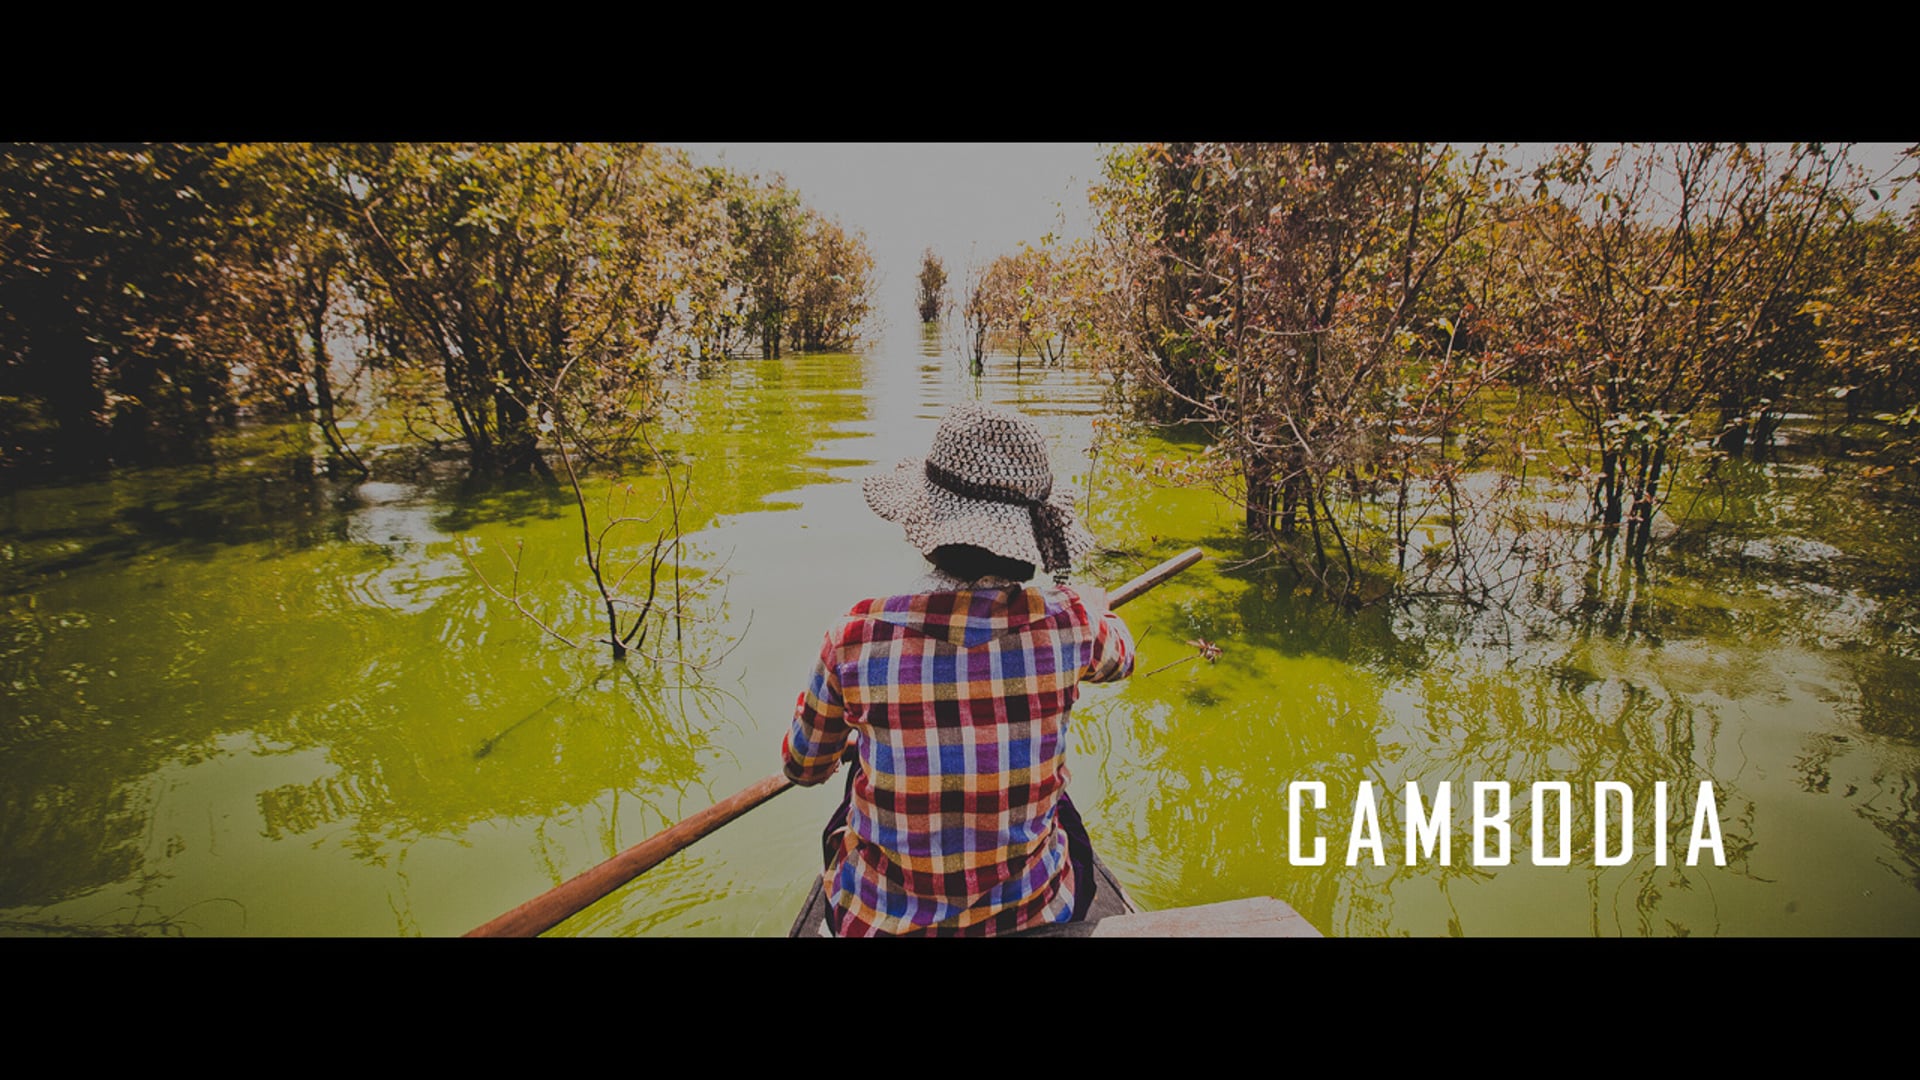 My trip to CAMBODIA.